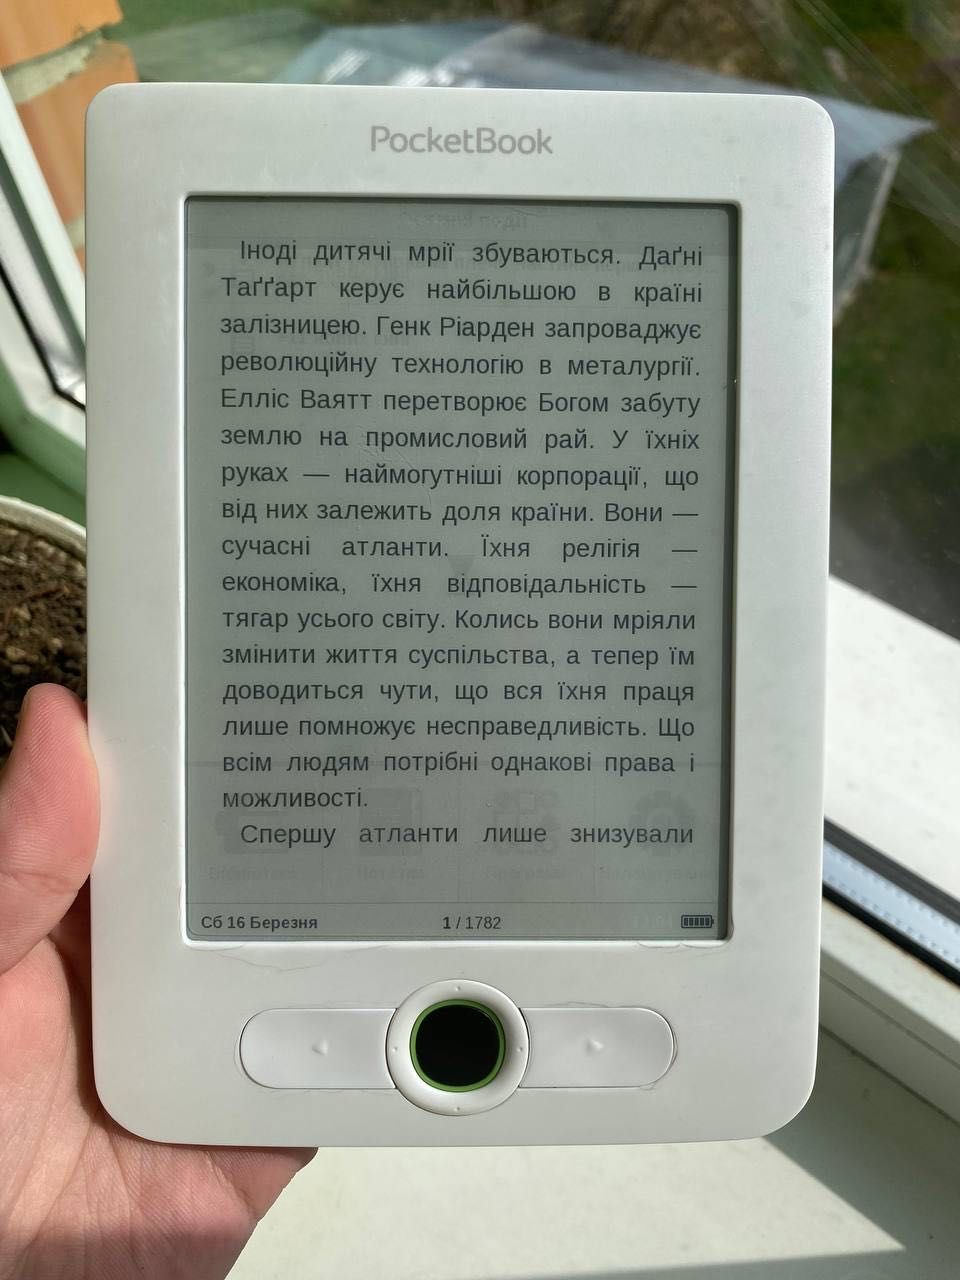 Електронна книга PocketBook 613 Basic читалка рідер покетбук